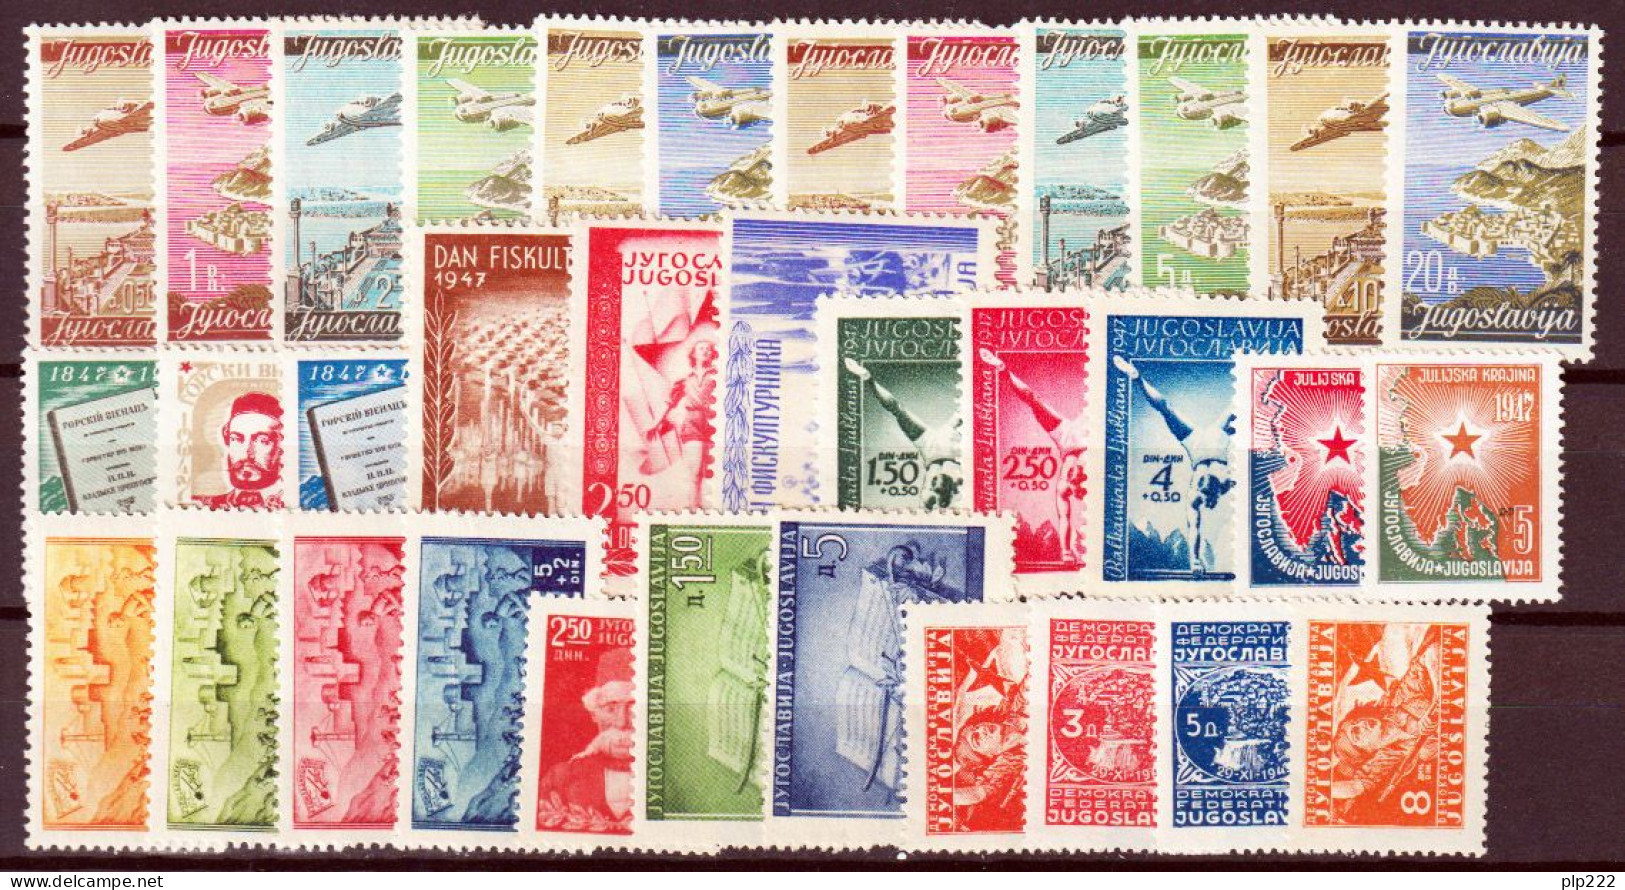 Jugoslavia 1947 Annata Completa / Complete Year Set **/MNH VF/F - Años Completos